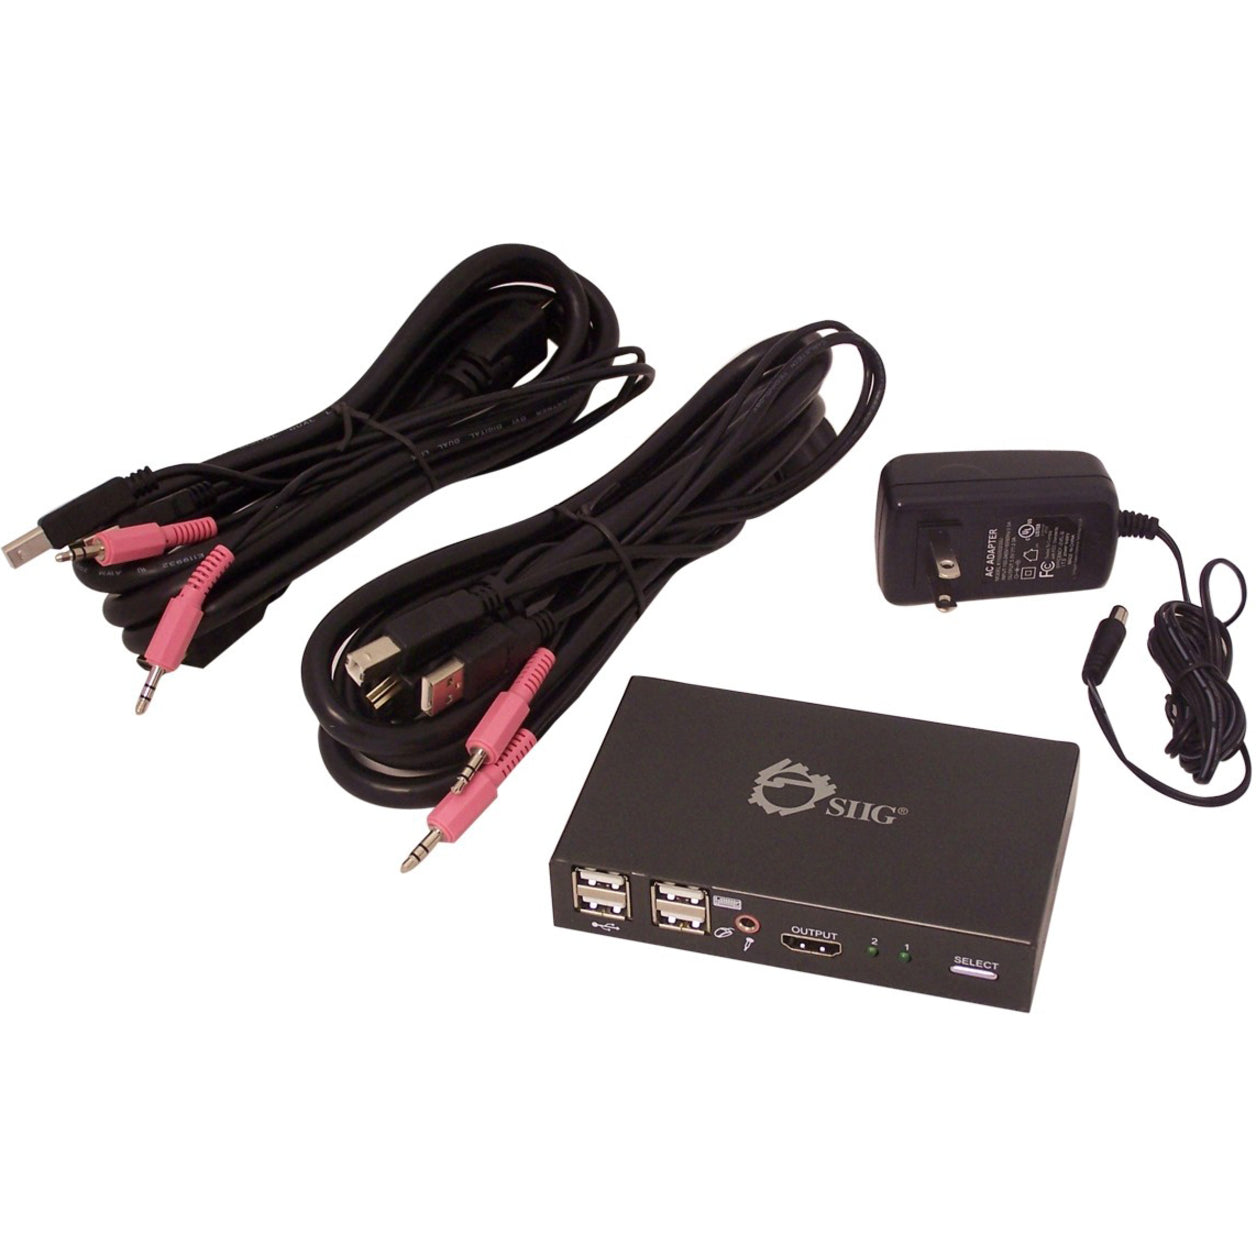 SIIG CE-KV0011-S2 2x1 USB HDMI KVM Switch - 4Kx2K, 3-Year Warranty, USB and HDMI Ports, 6 USB Ports, 3 HDMI Ports